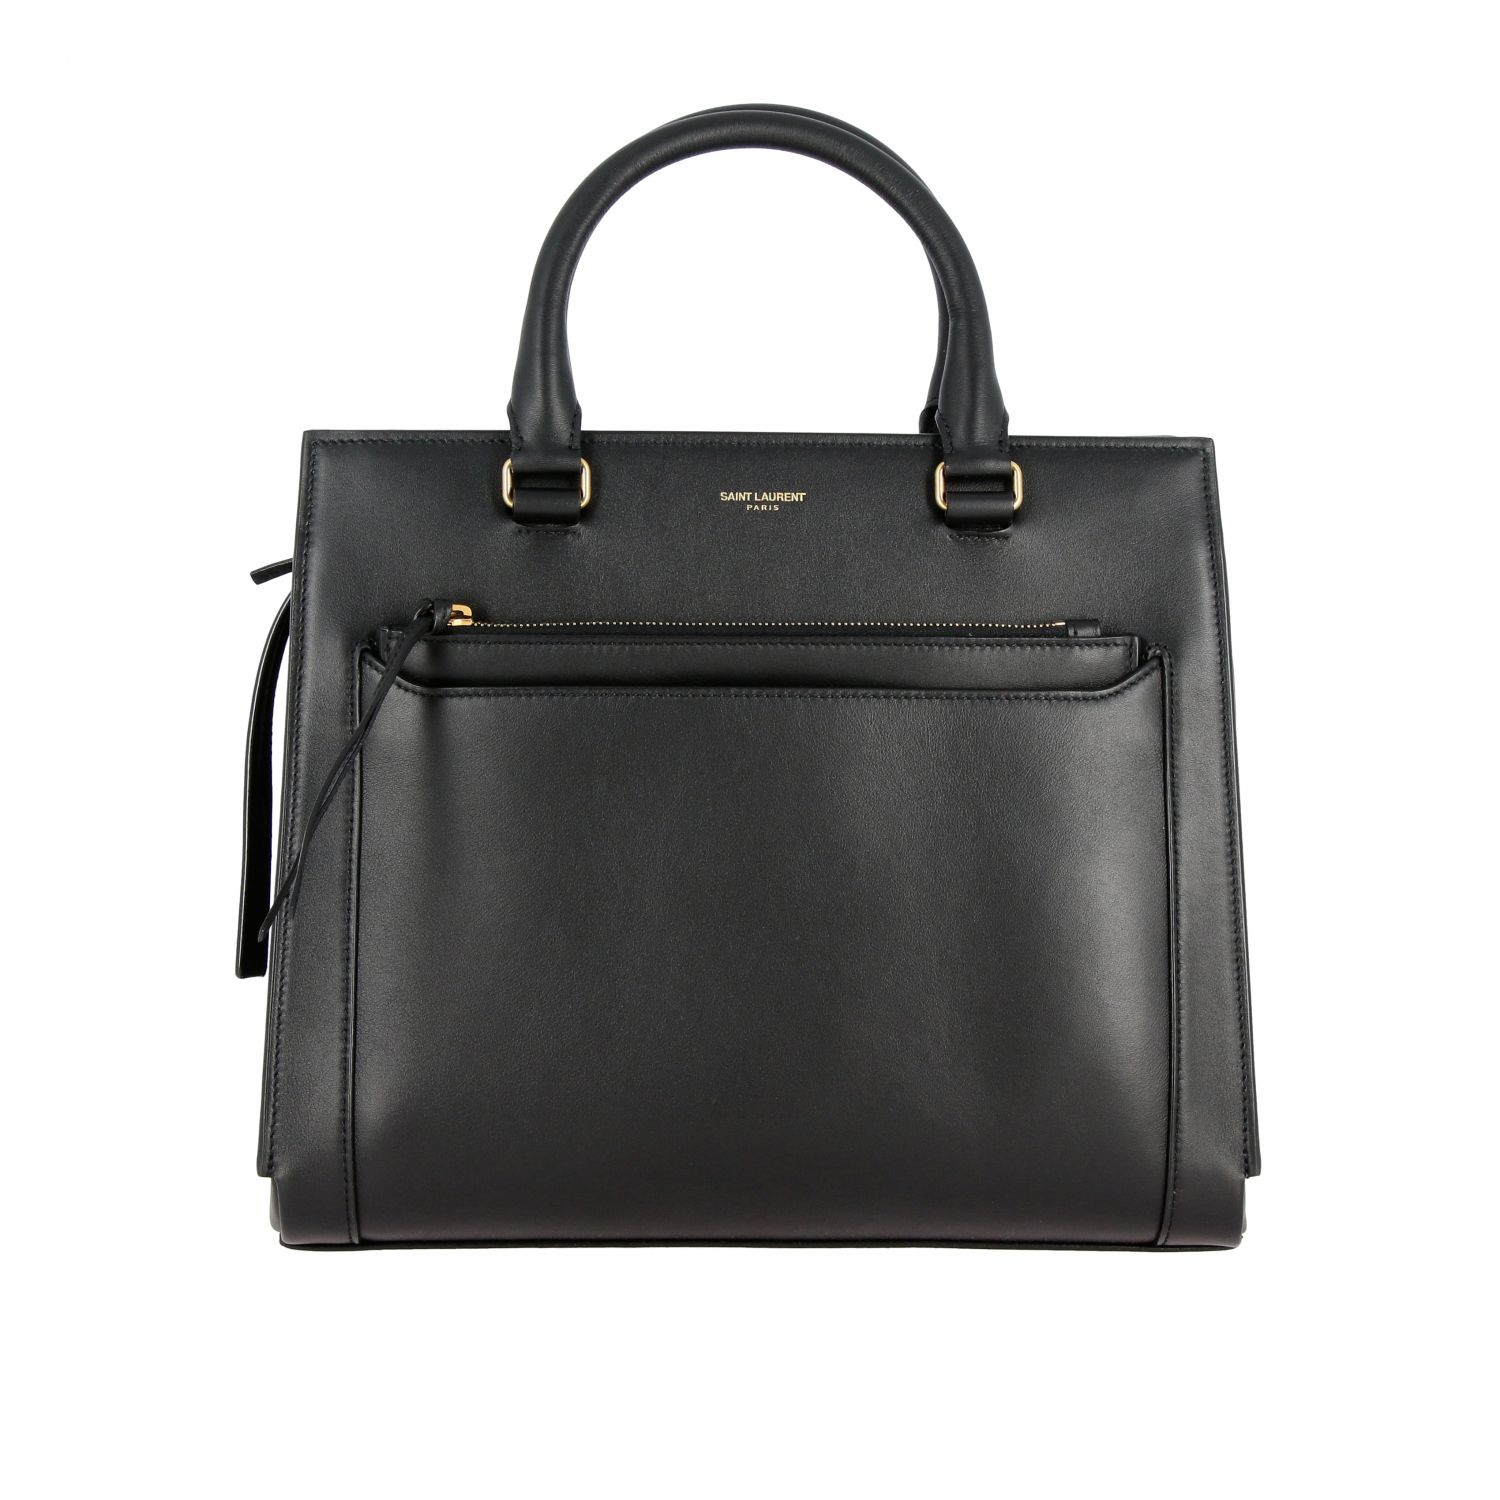 SAINT LAURENT: East side leather bag - Black | Handbag Saint Laurent ...